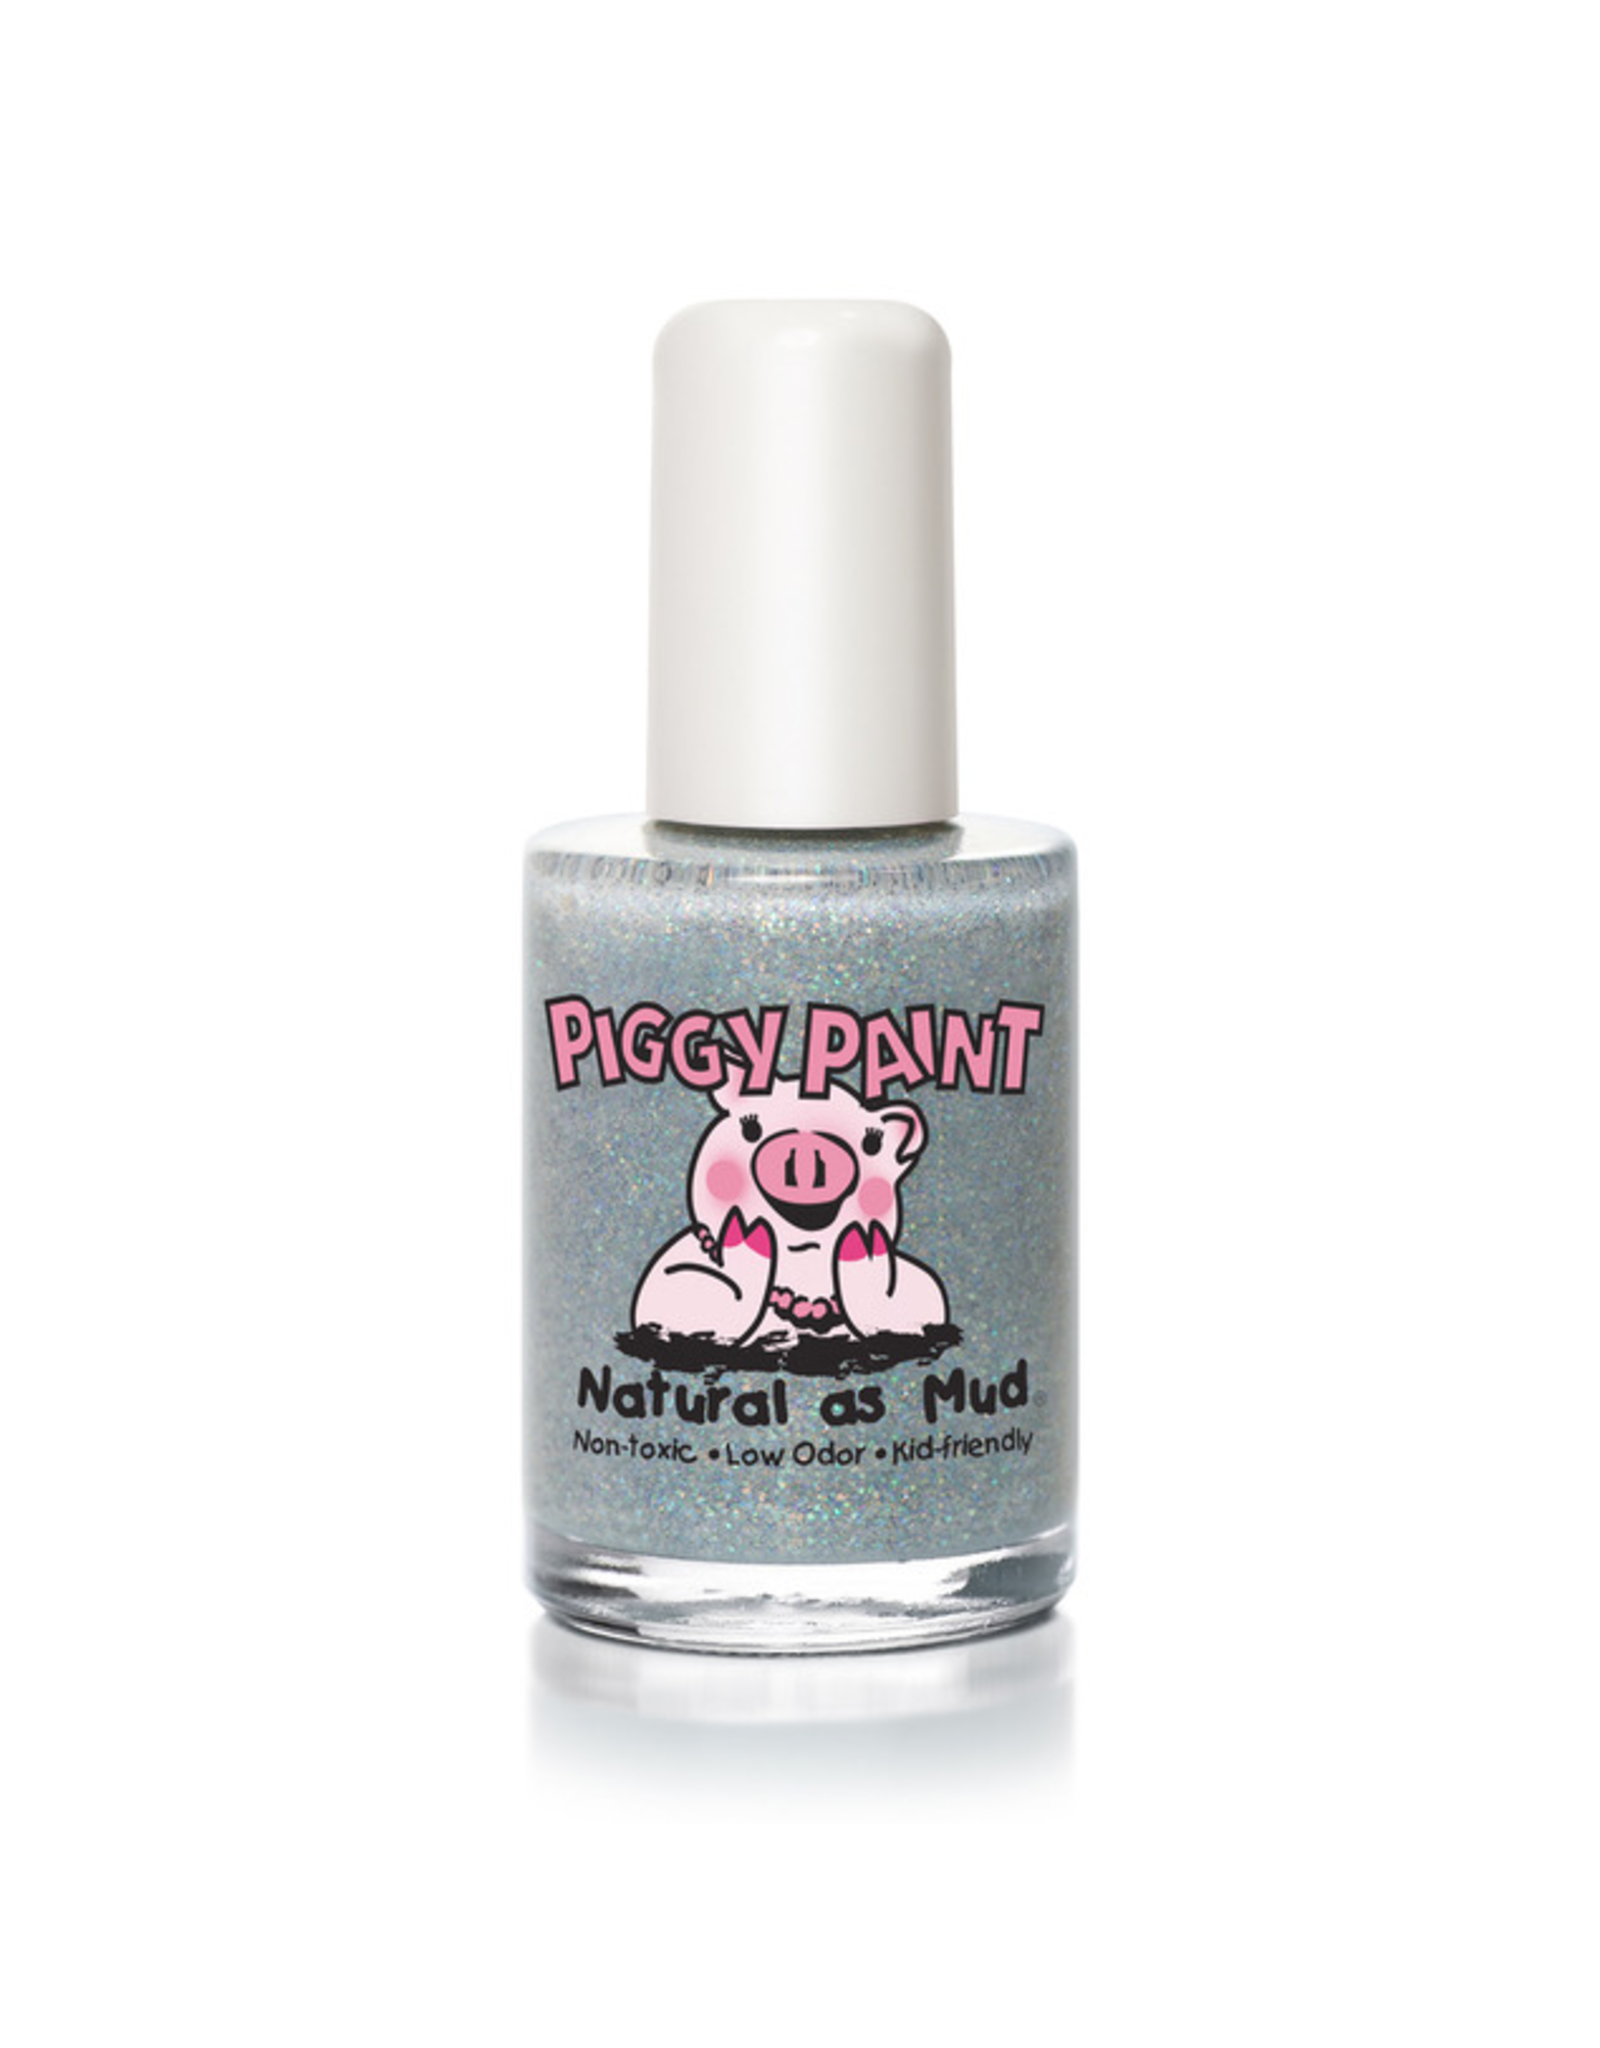 Piggy Paint Glitter Bug Nail Polish